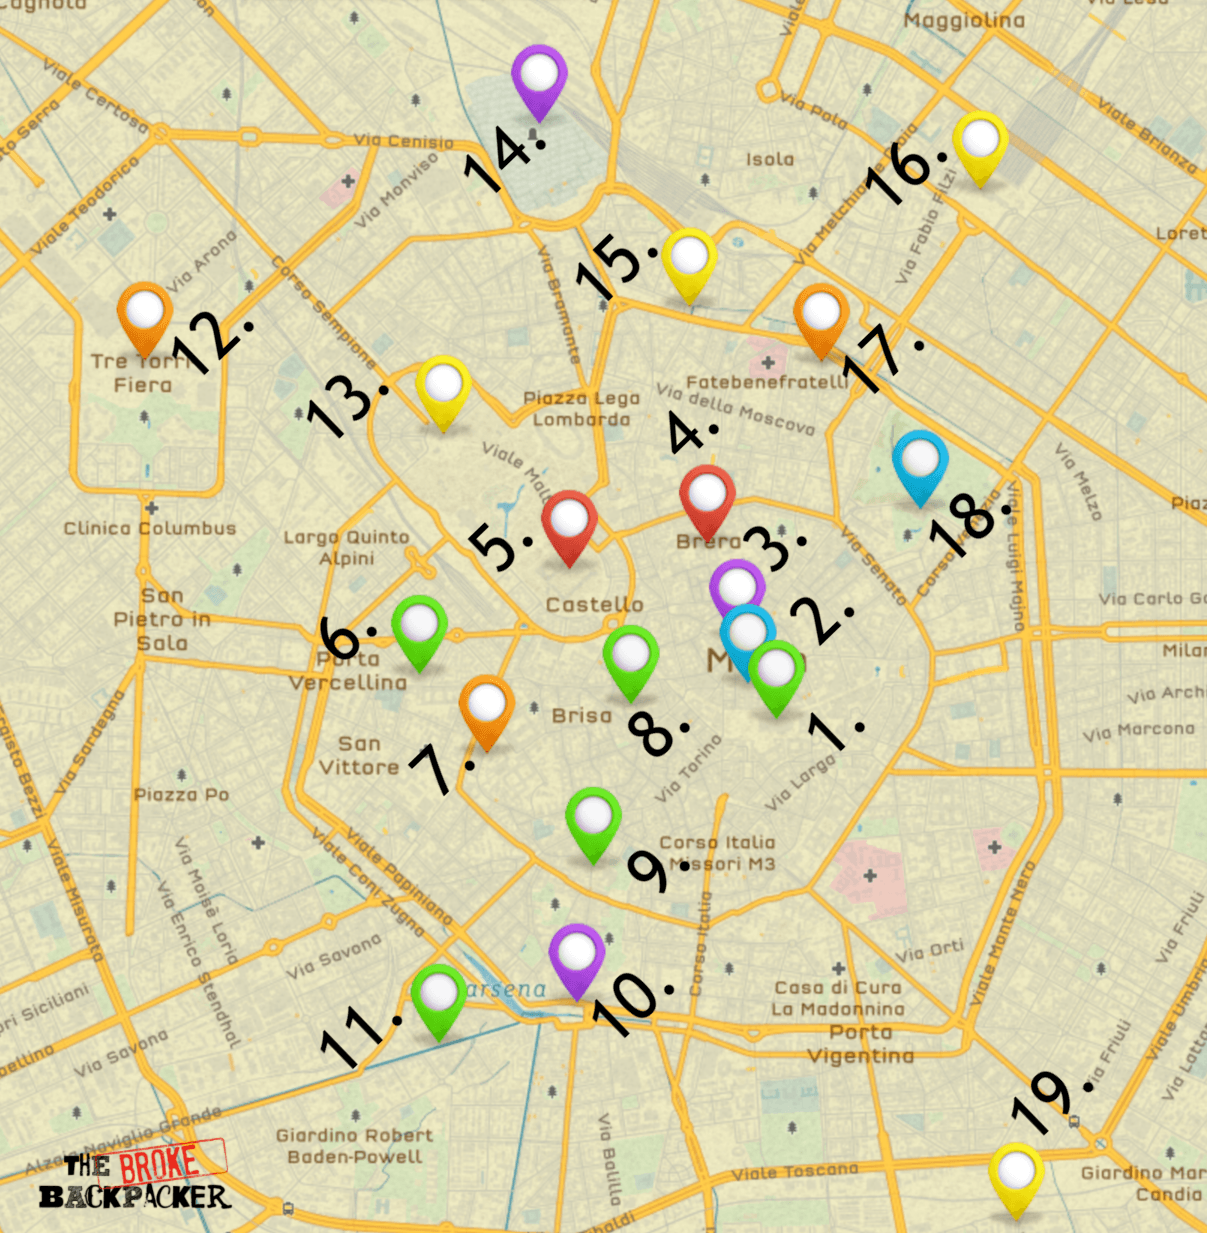 map of milan itinerary